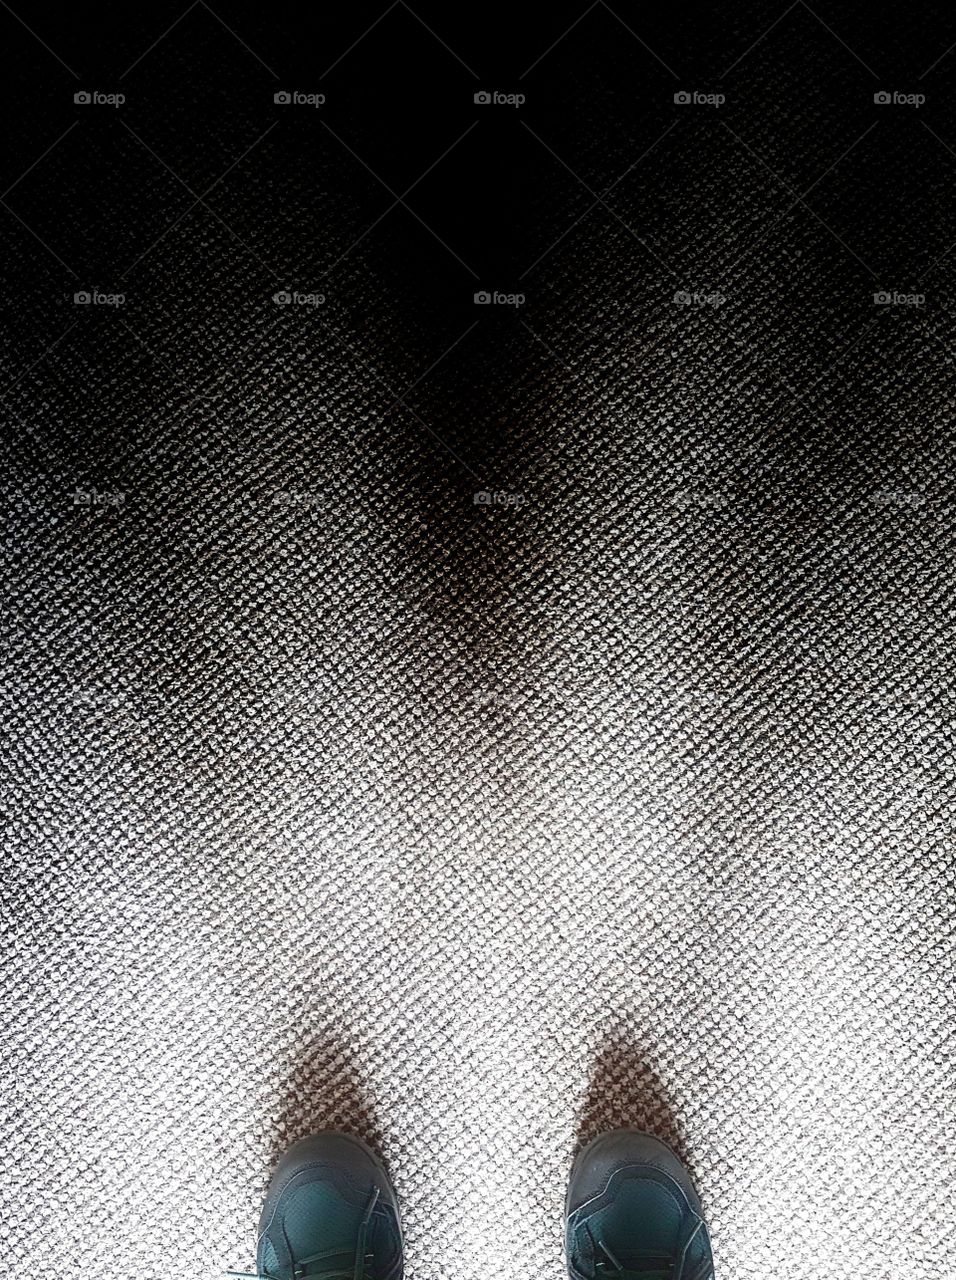 Shadows on a carpet